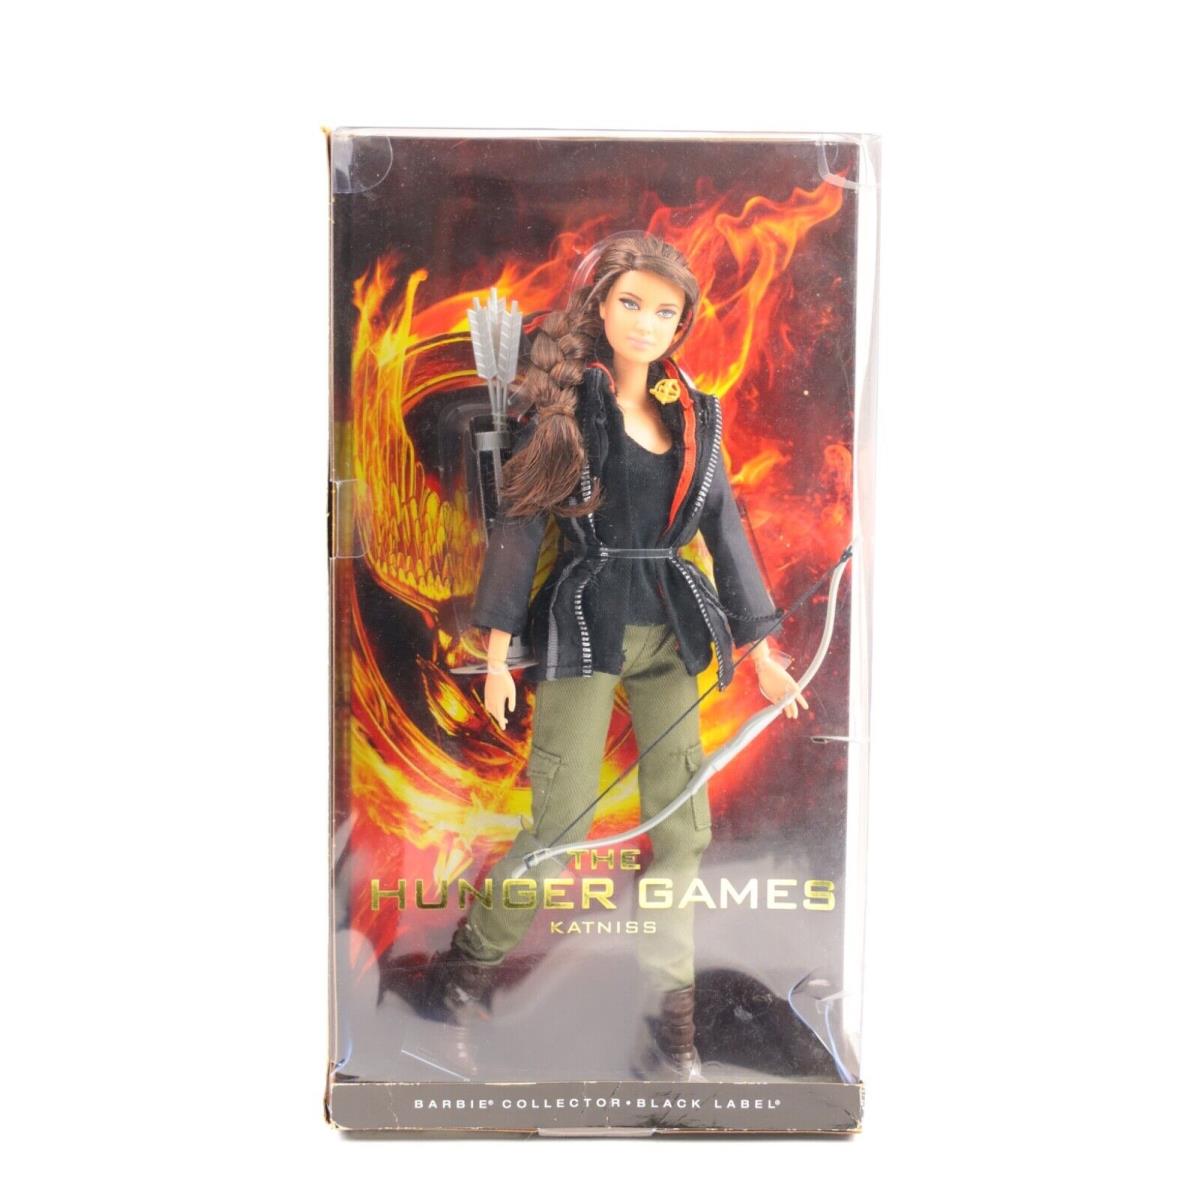 Katniss The Hunger Games Doll Barbie Collector Black Label Mib Nrfb Mattel